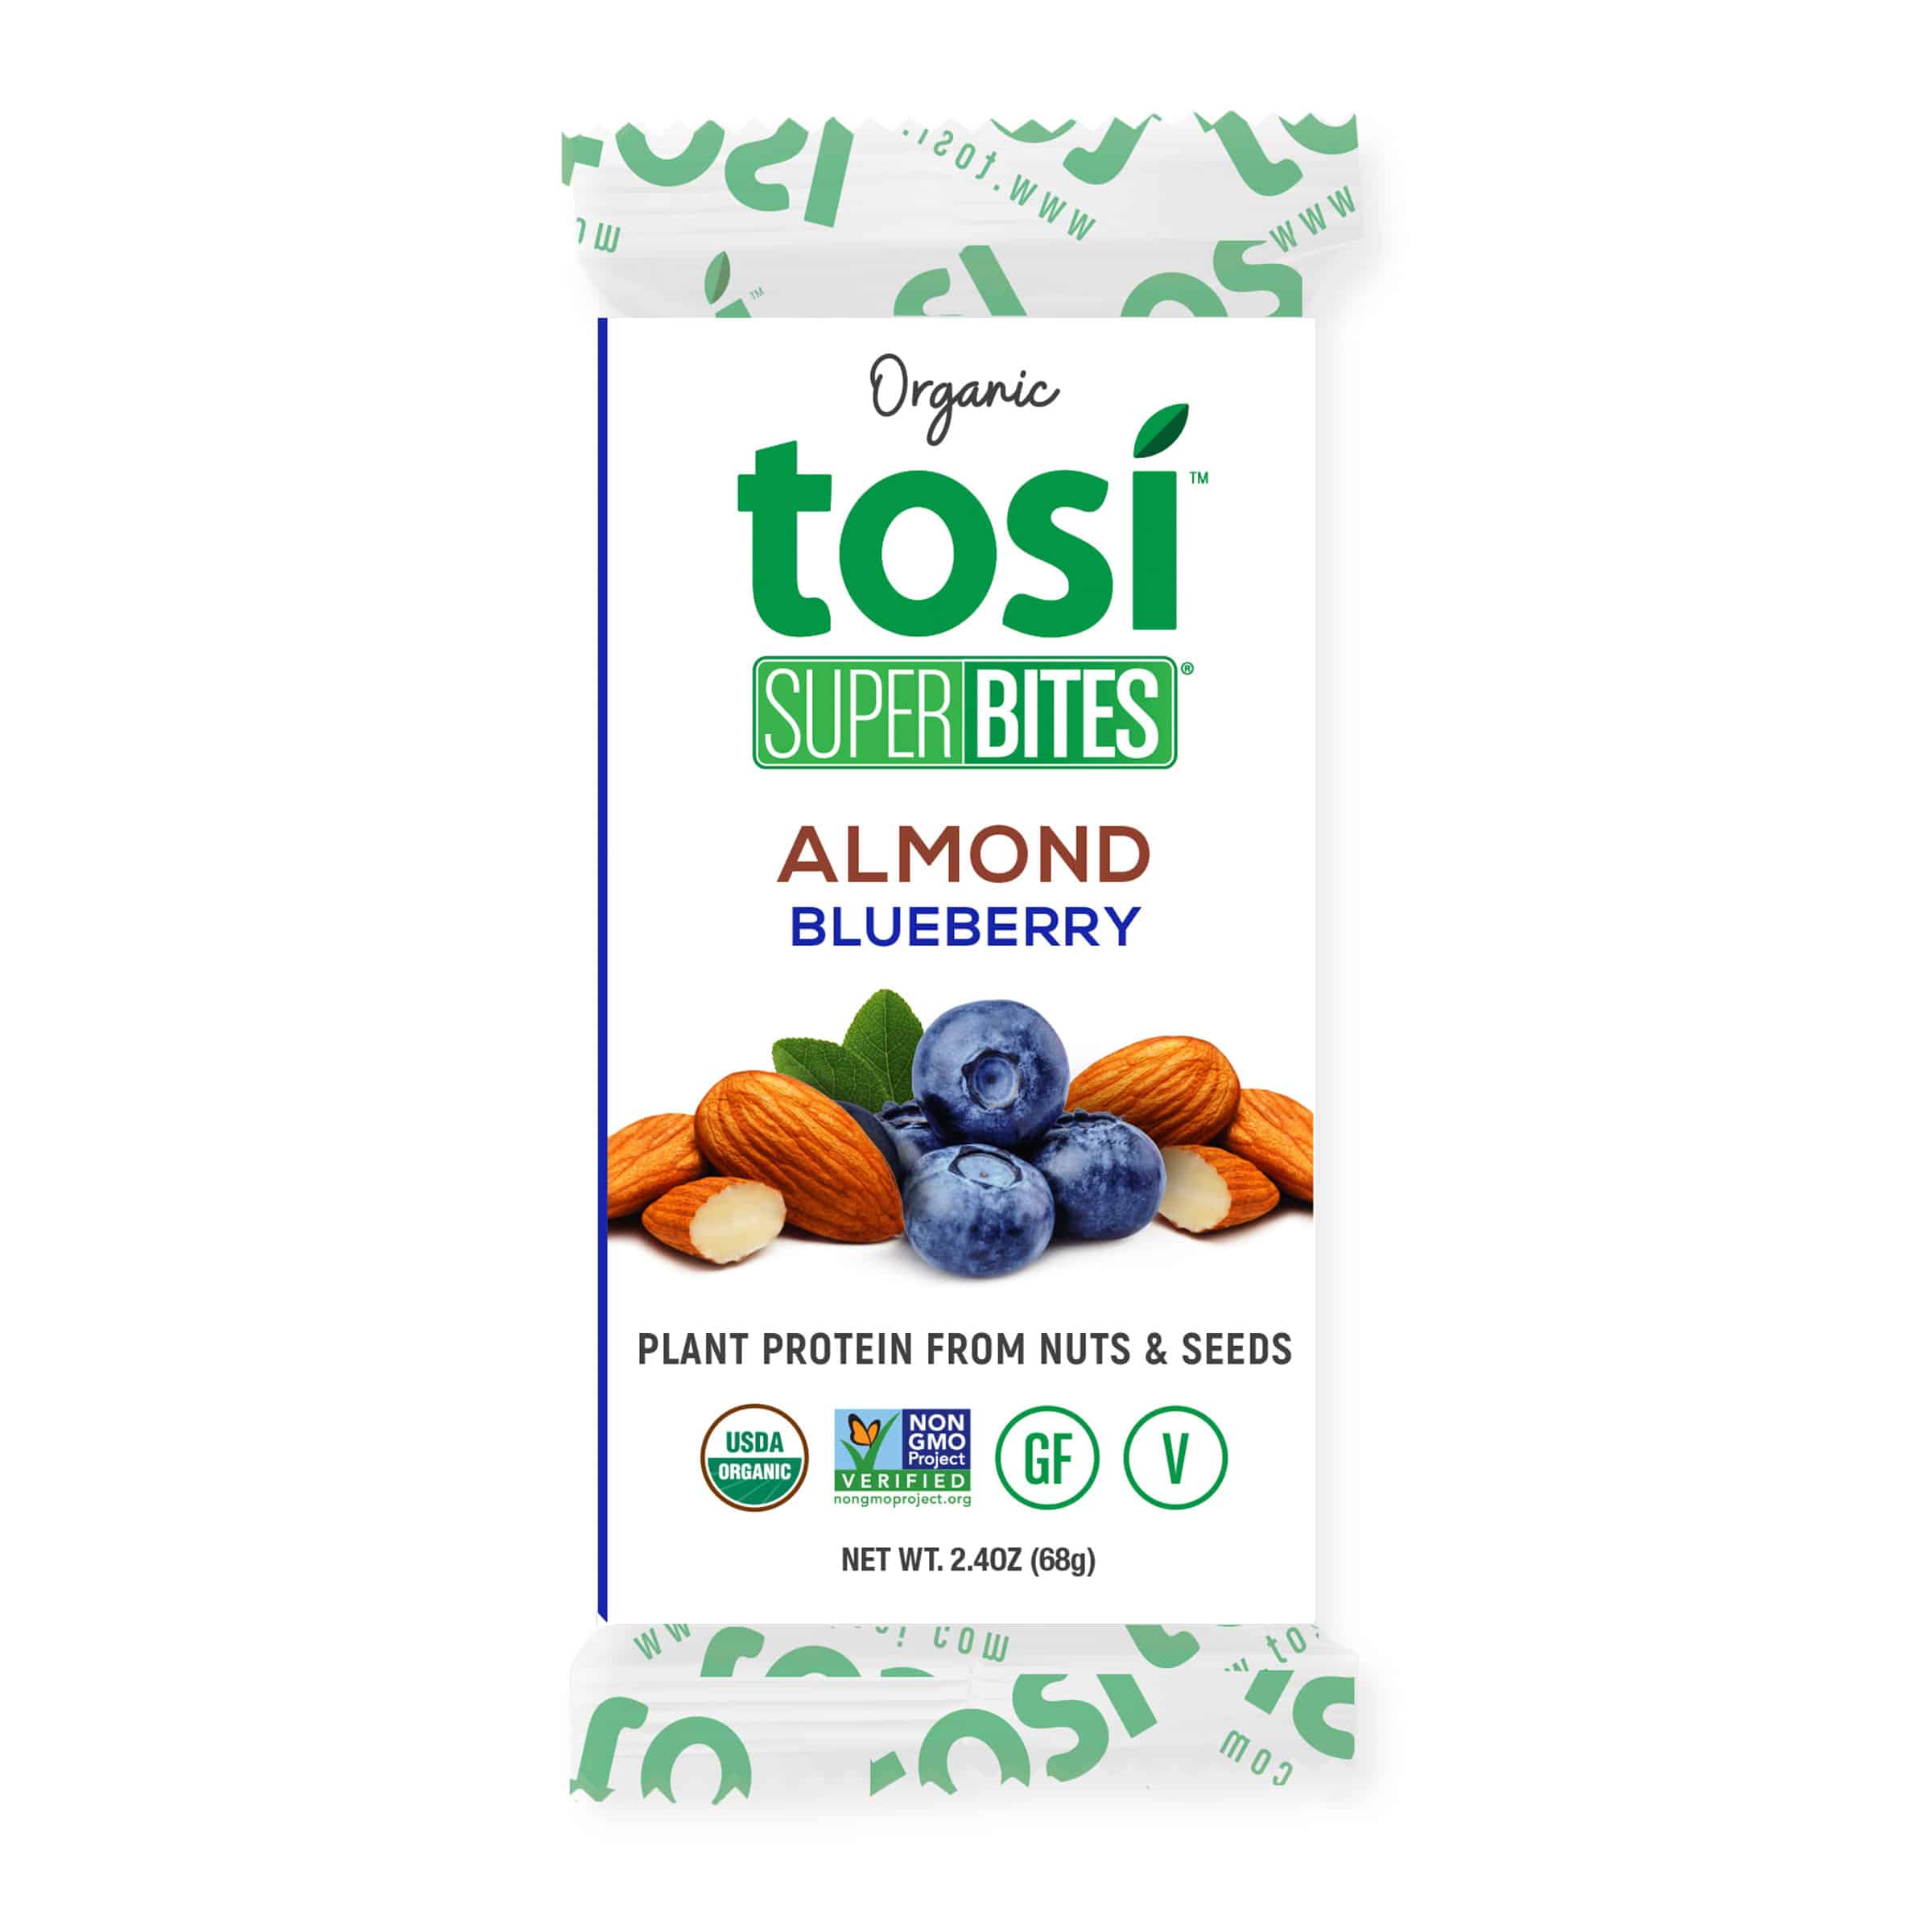 Tosi SuperBites Almond Blueberry 4 innerpacks per case 28.8 oz